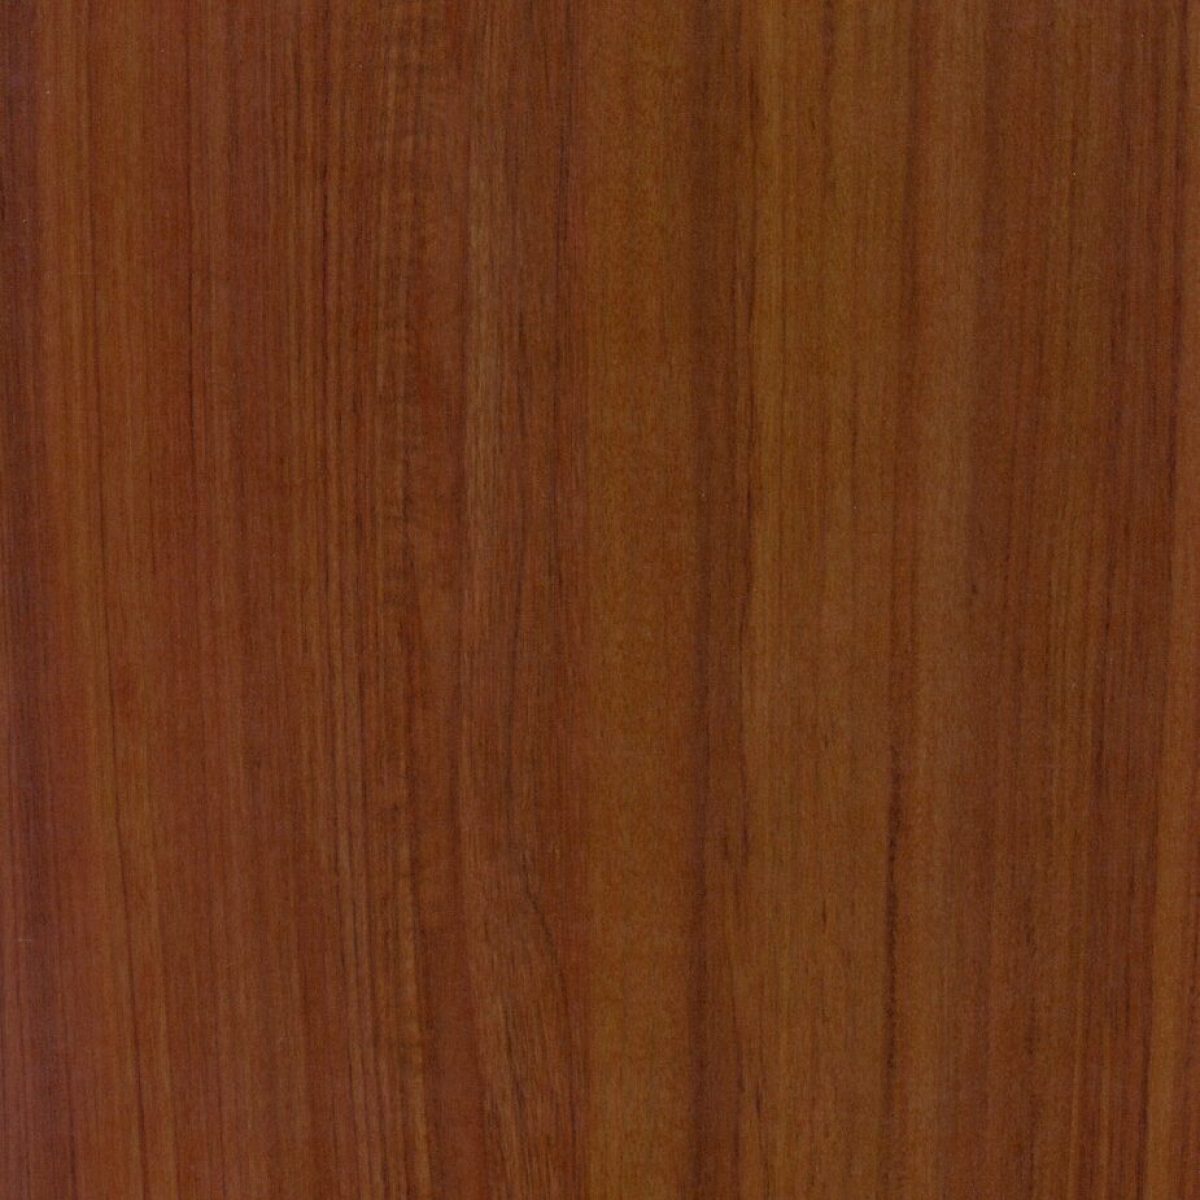 GRANADILLO - Tamaños (1,22 x 2,44m)  |  Espesor (0.7mm)